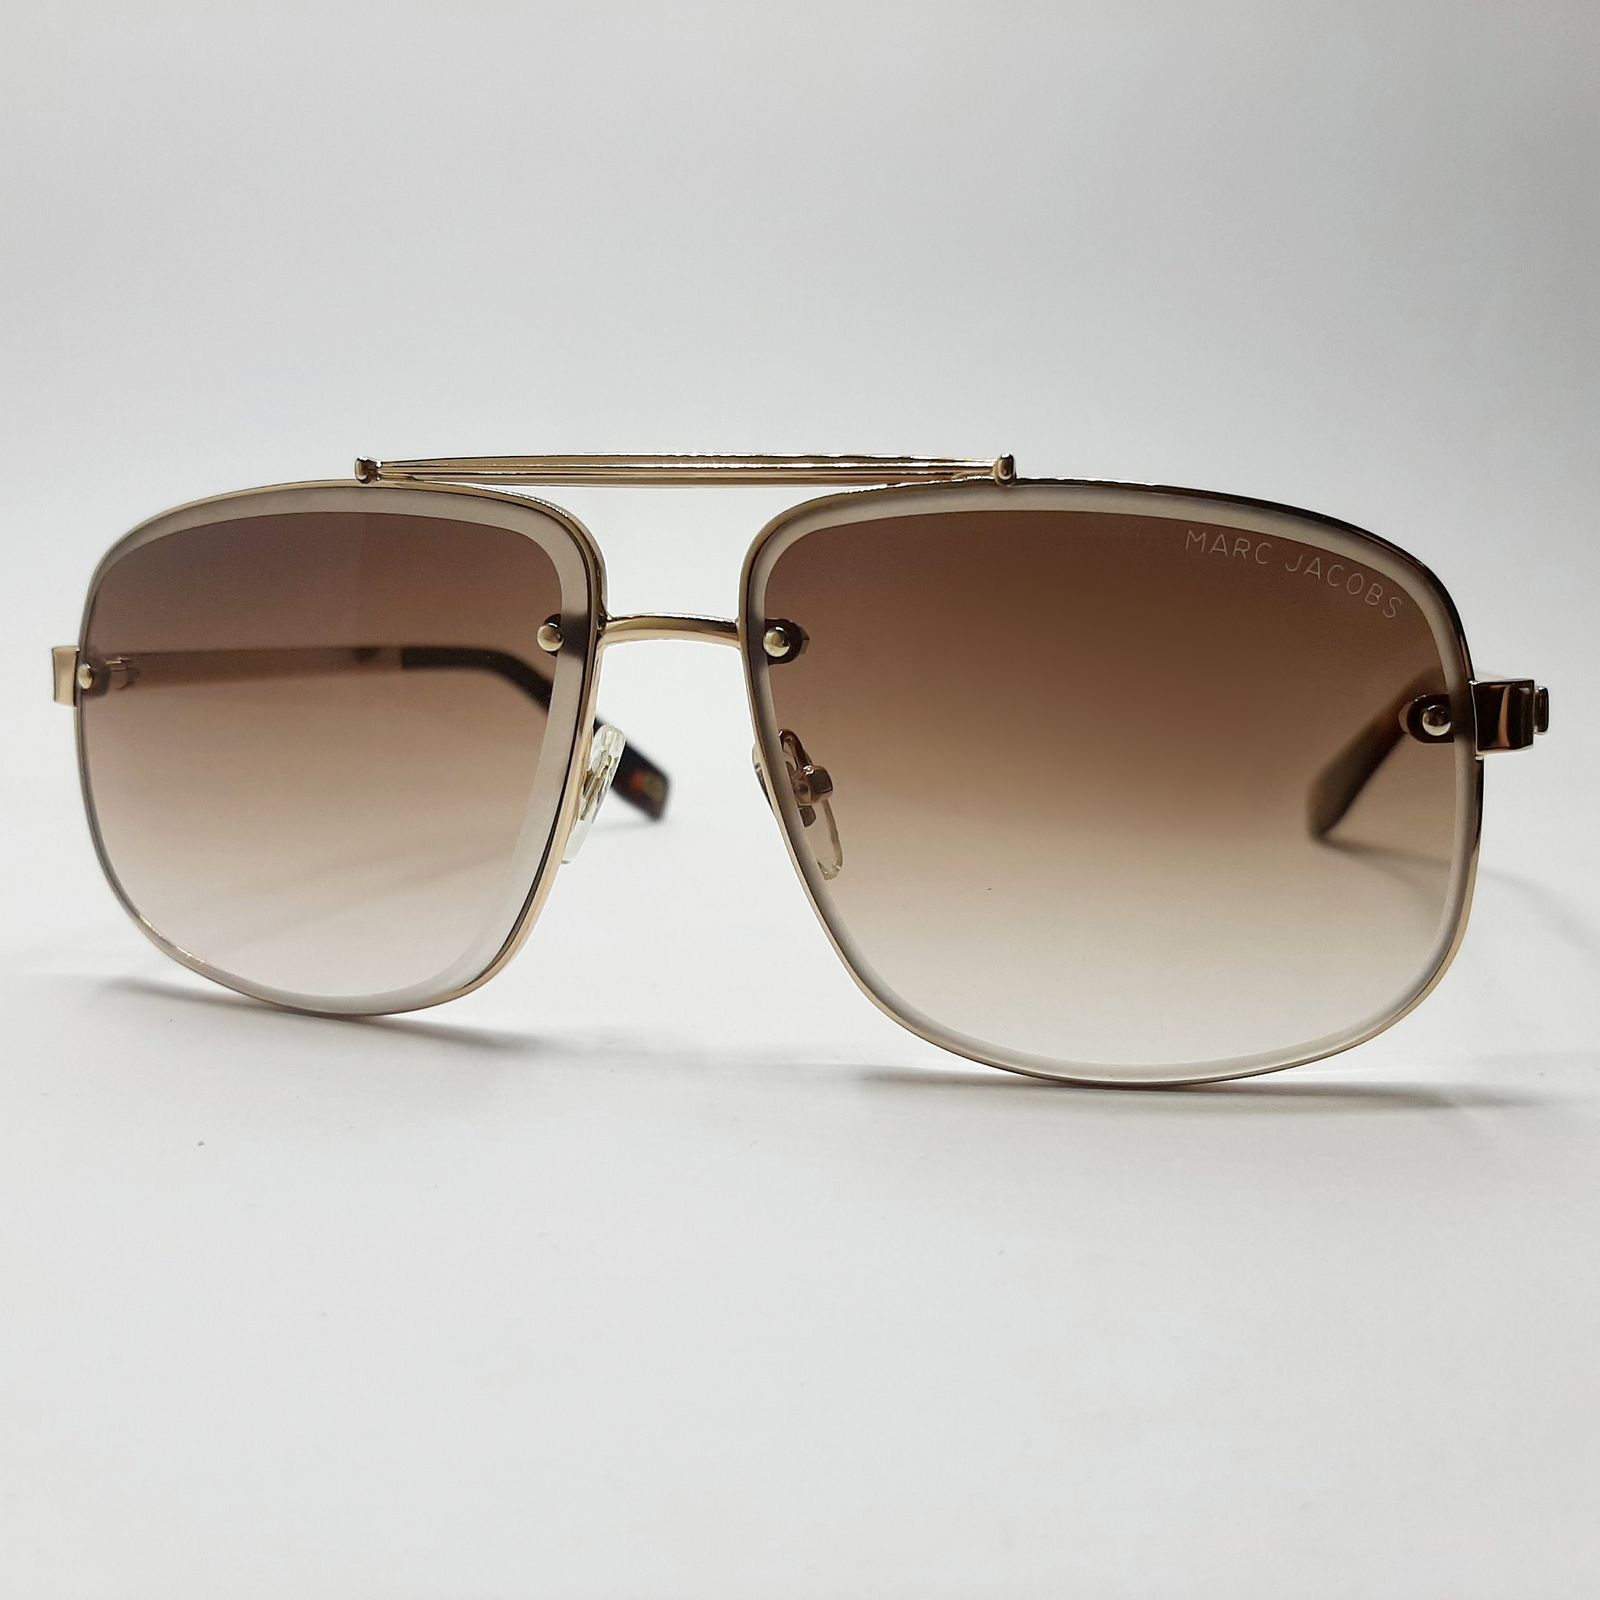 عینک آفتابی مارک جکوبس مدل MARC318Sc2 -  - 2